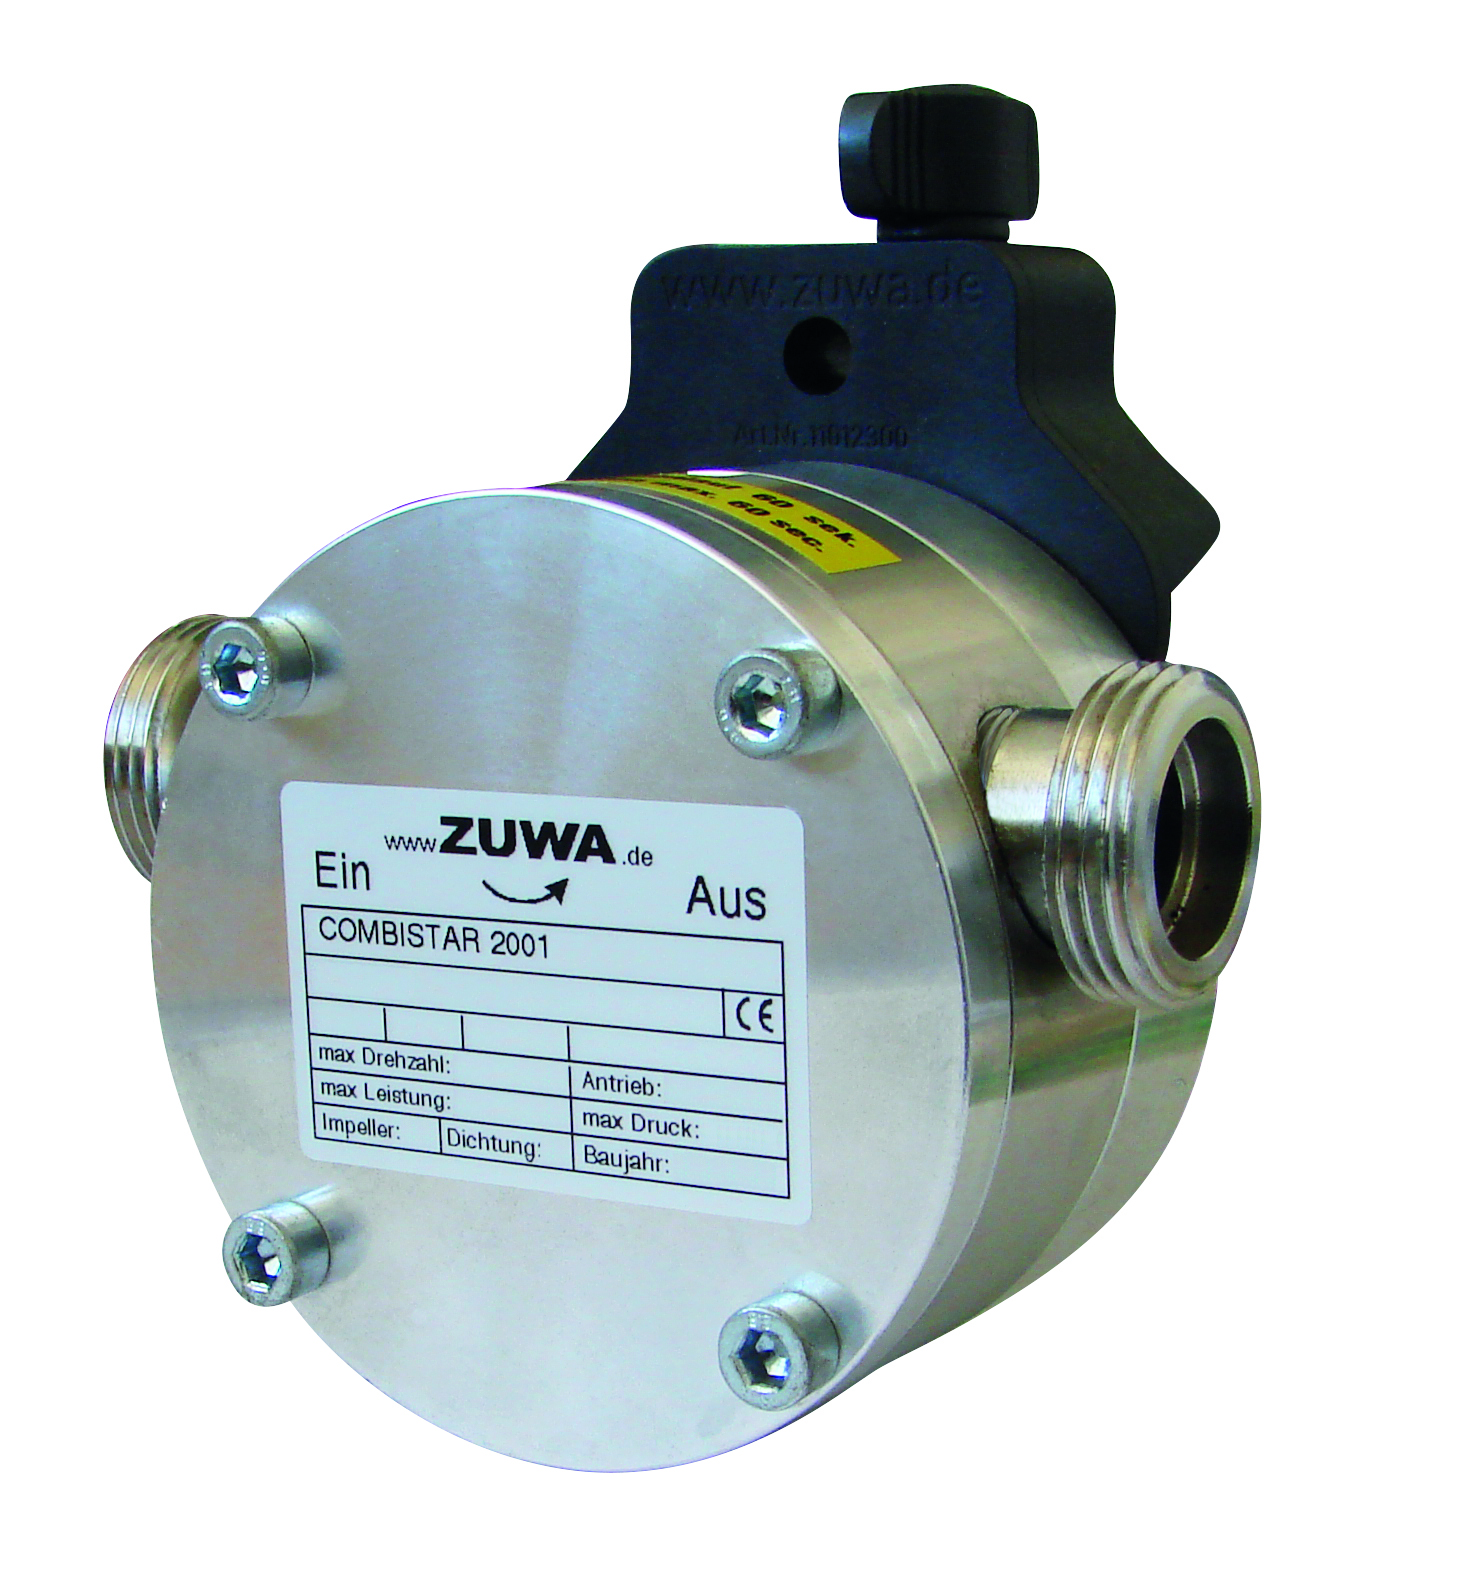 Zuwa Impellerpumpe COMBISTAR 2001-B, 60 l/min, Bohrmaschinenpumpe - 122111100AB